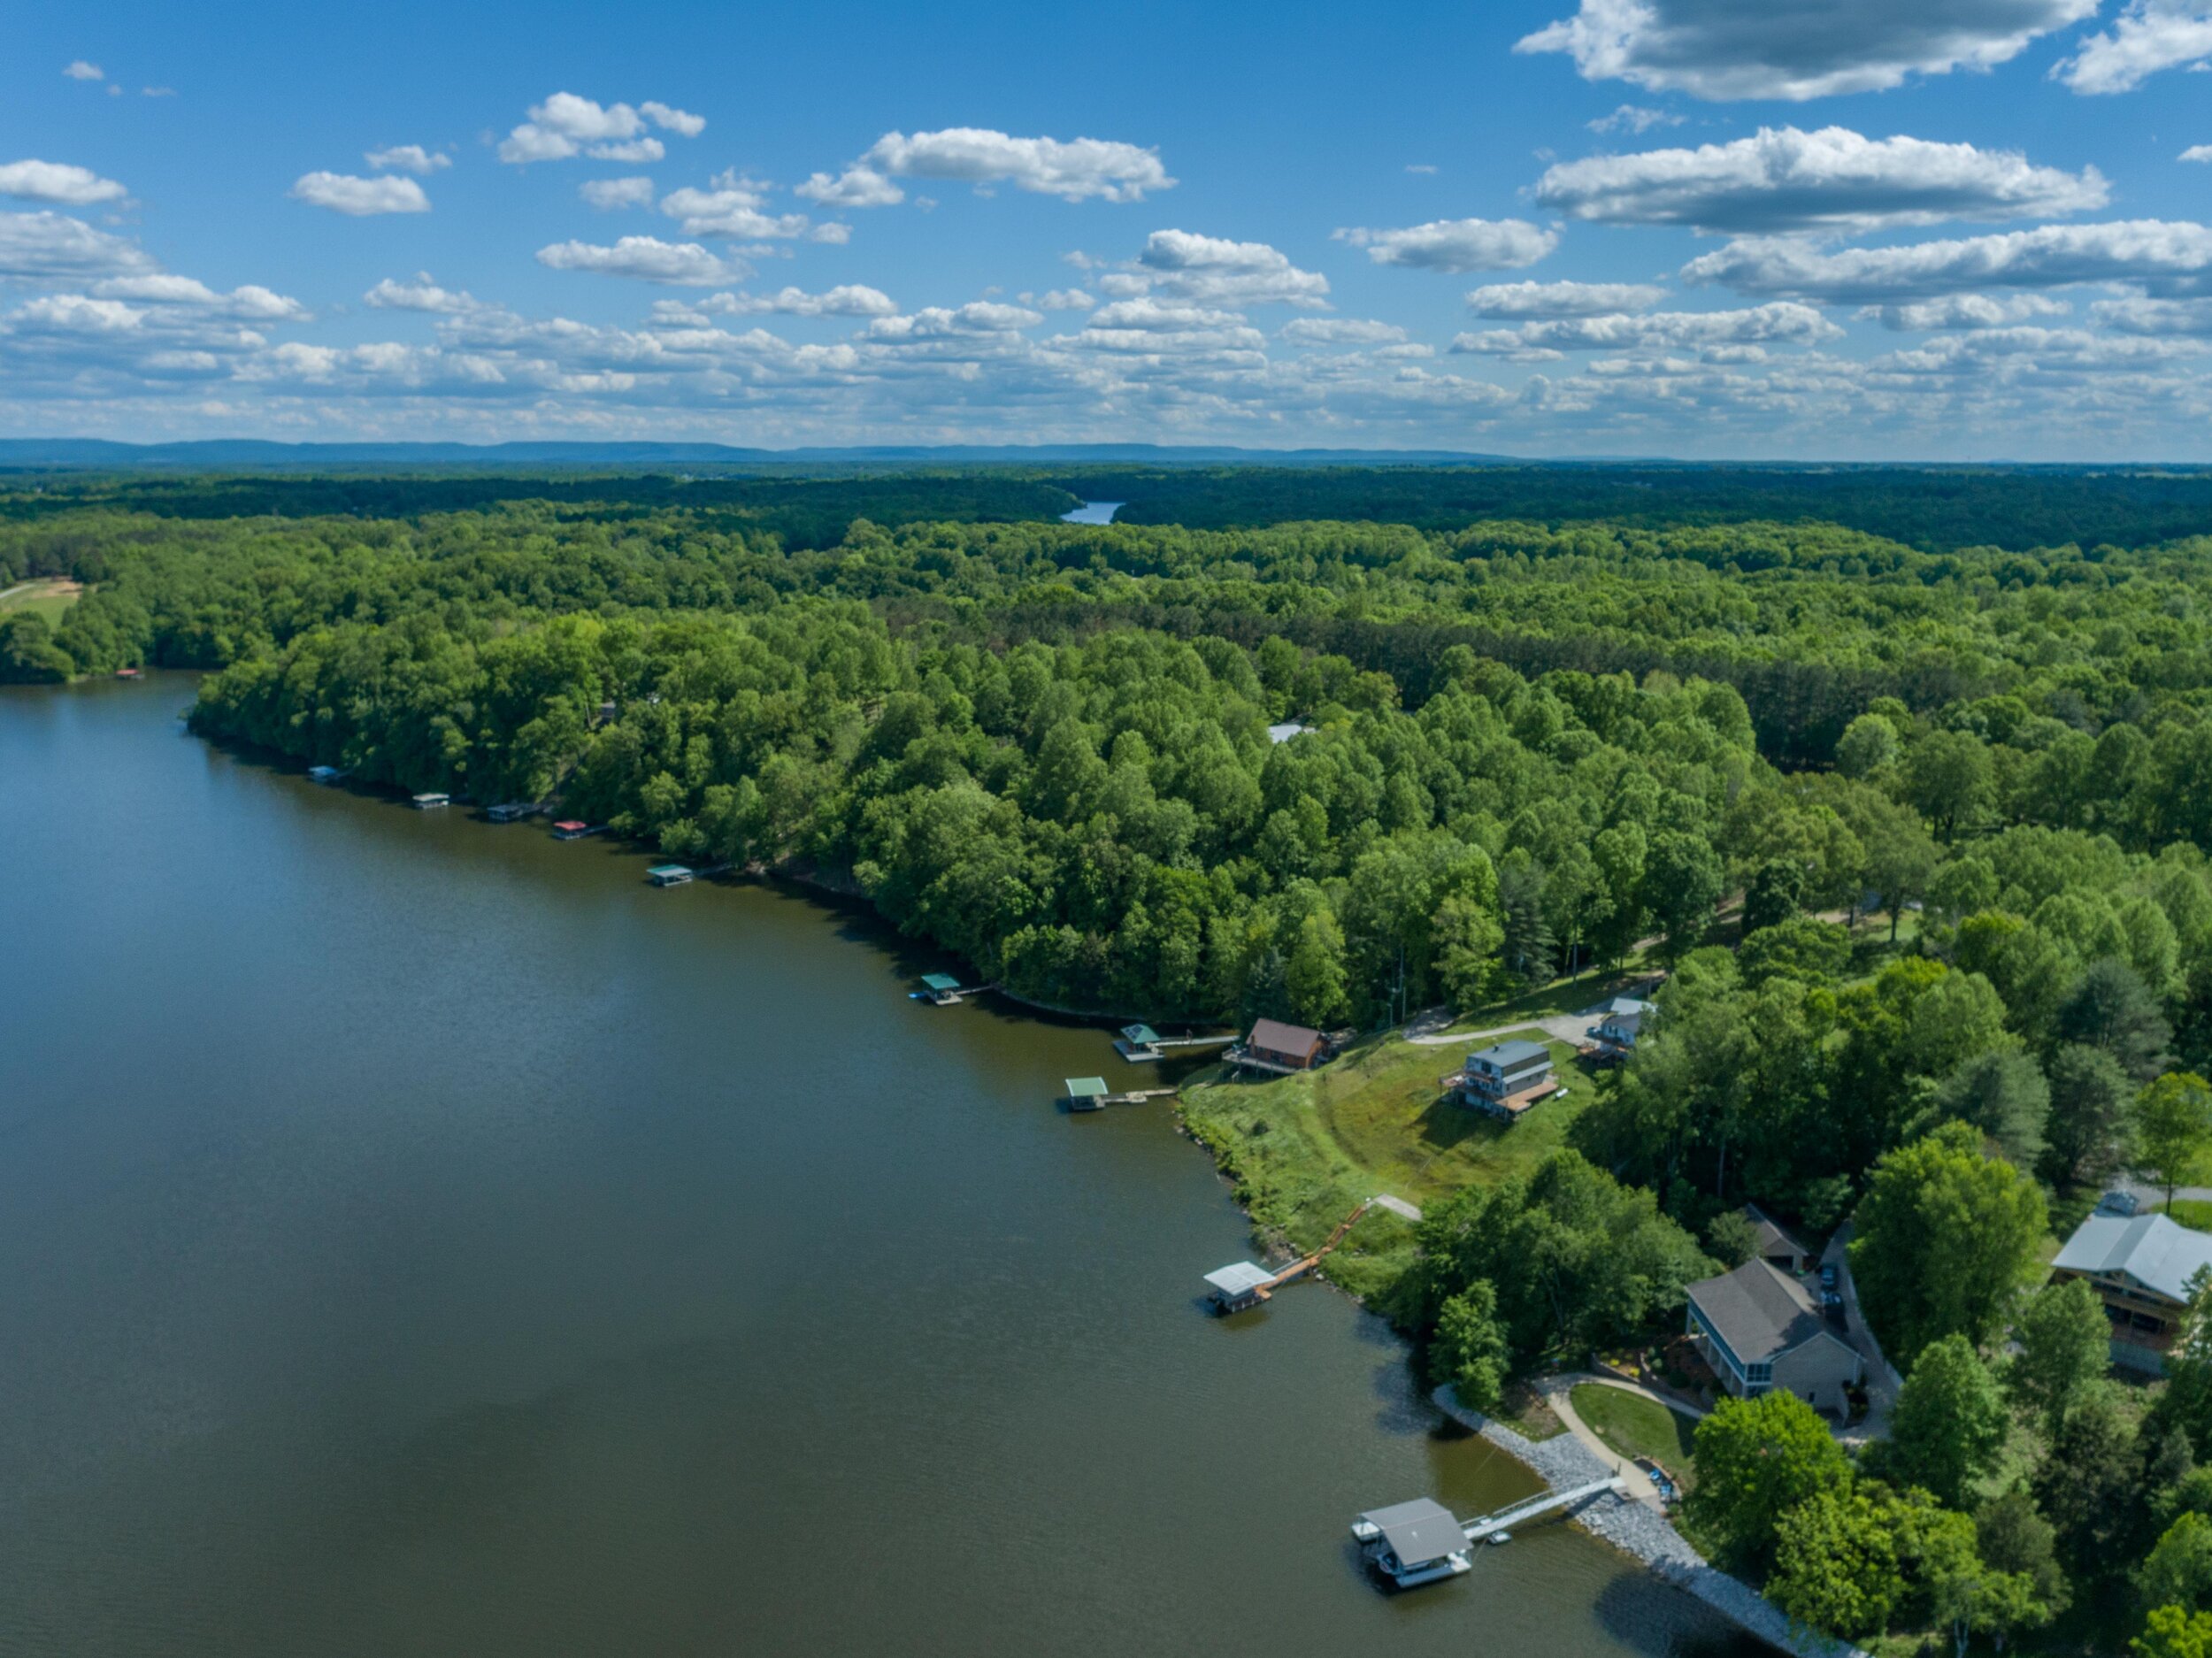 tims-ford-lake-drone-shot-greenery.jpg